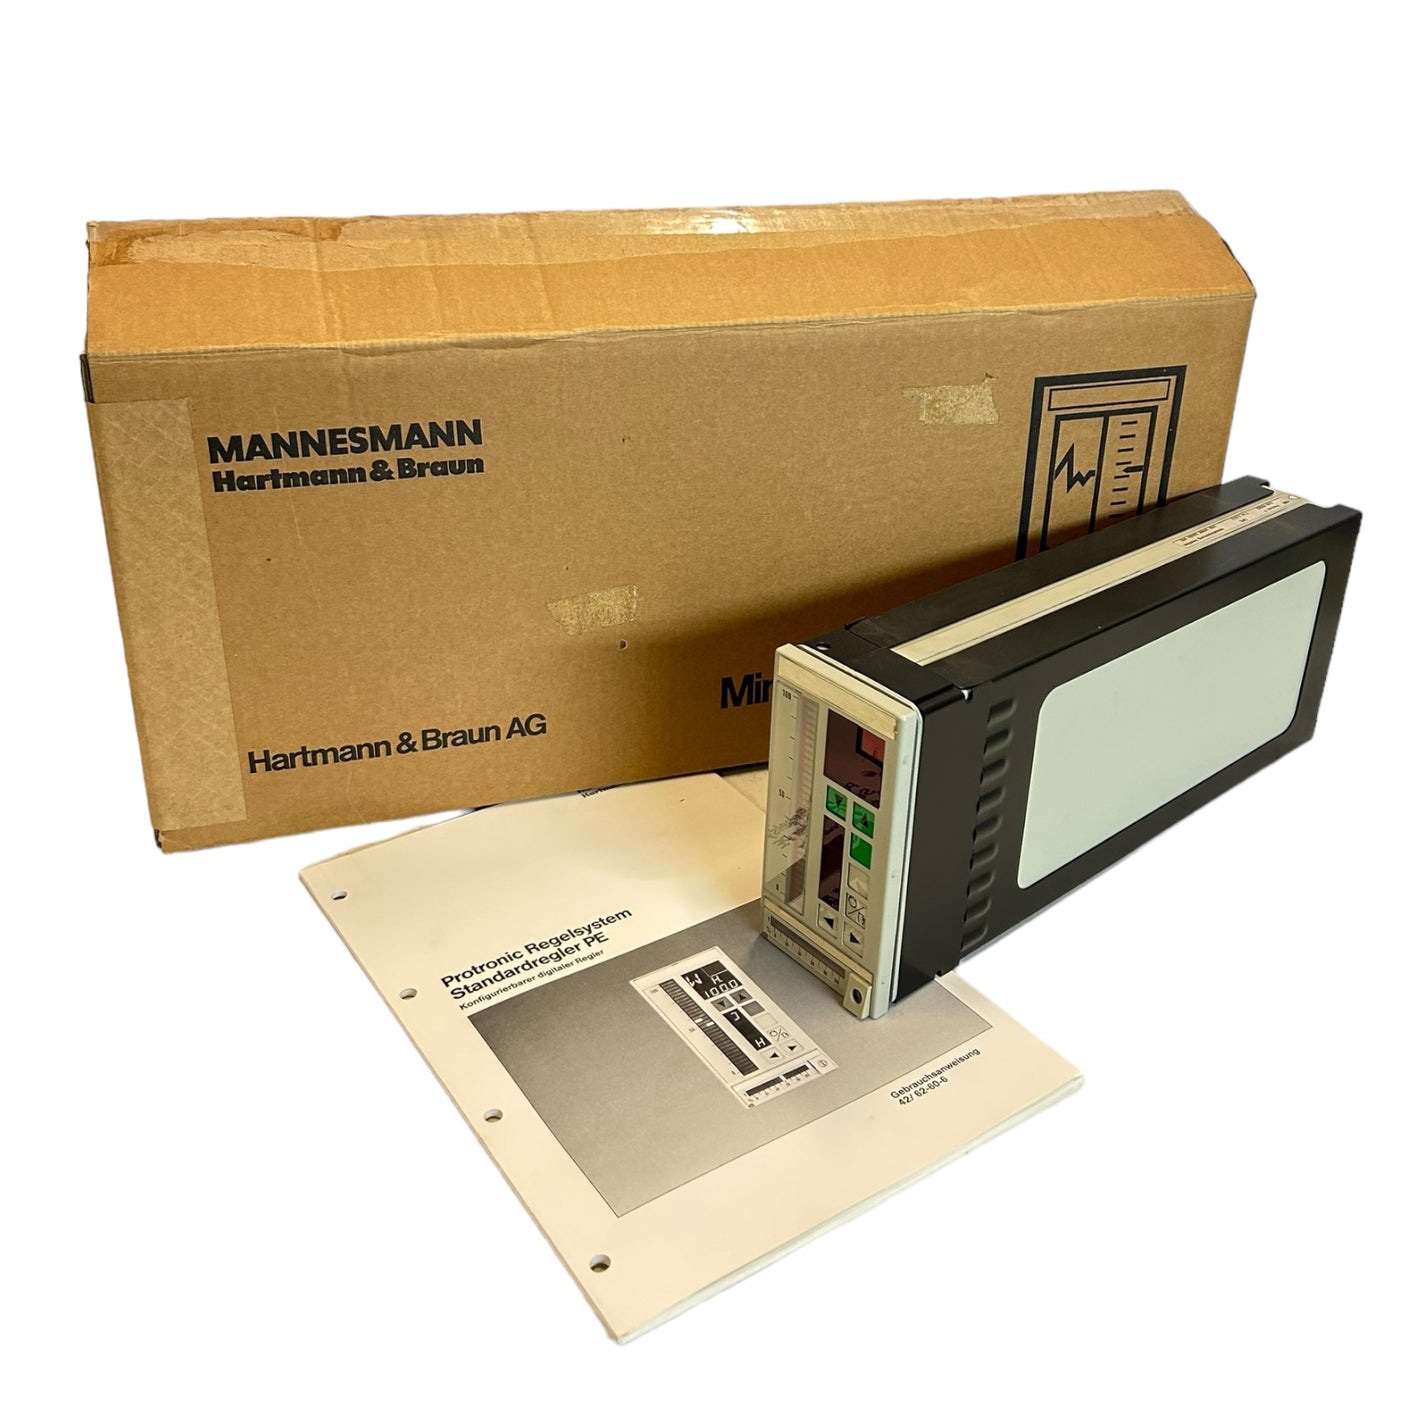 Mannesmann Protonic P standard regulator 62580 for industrial use Protonic P